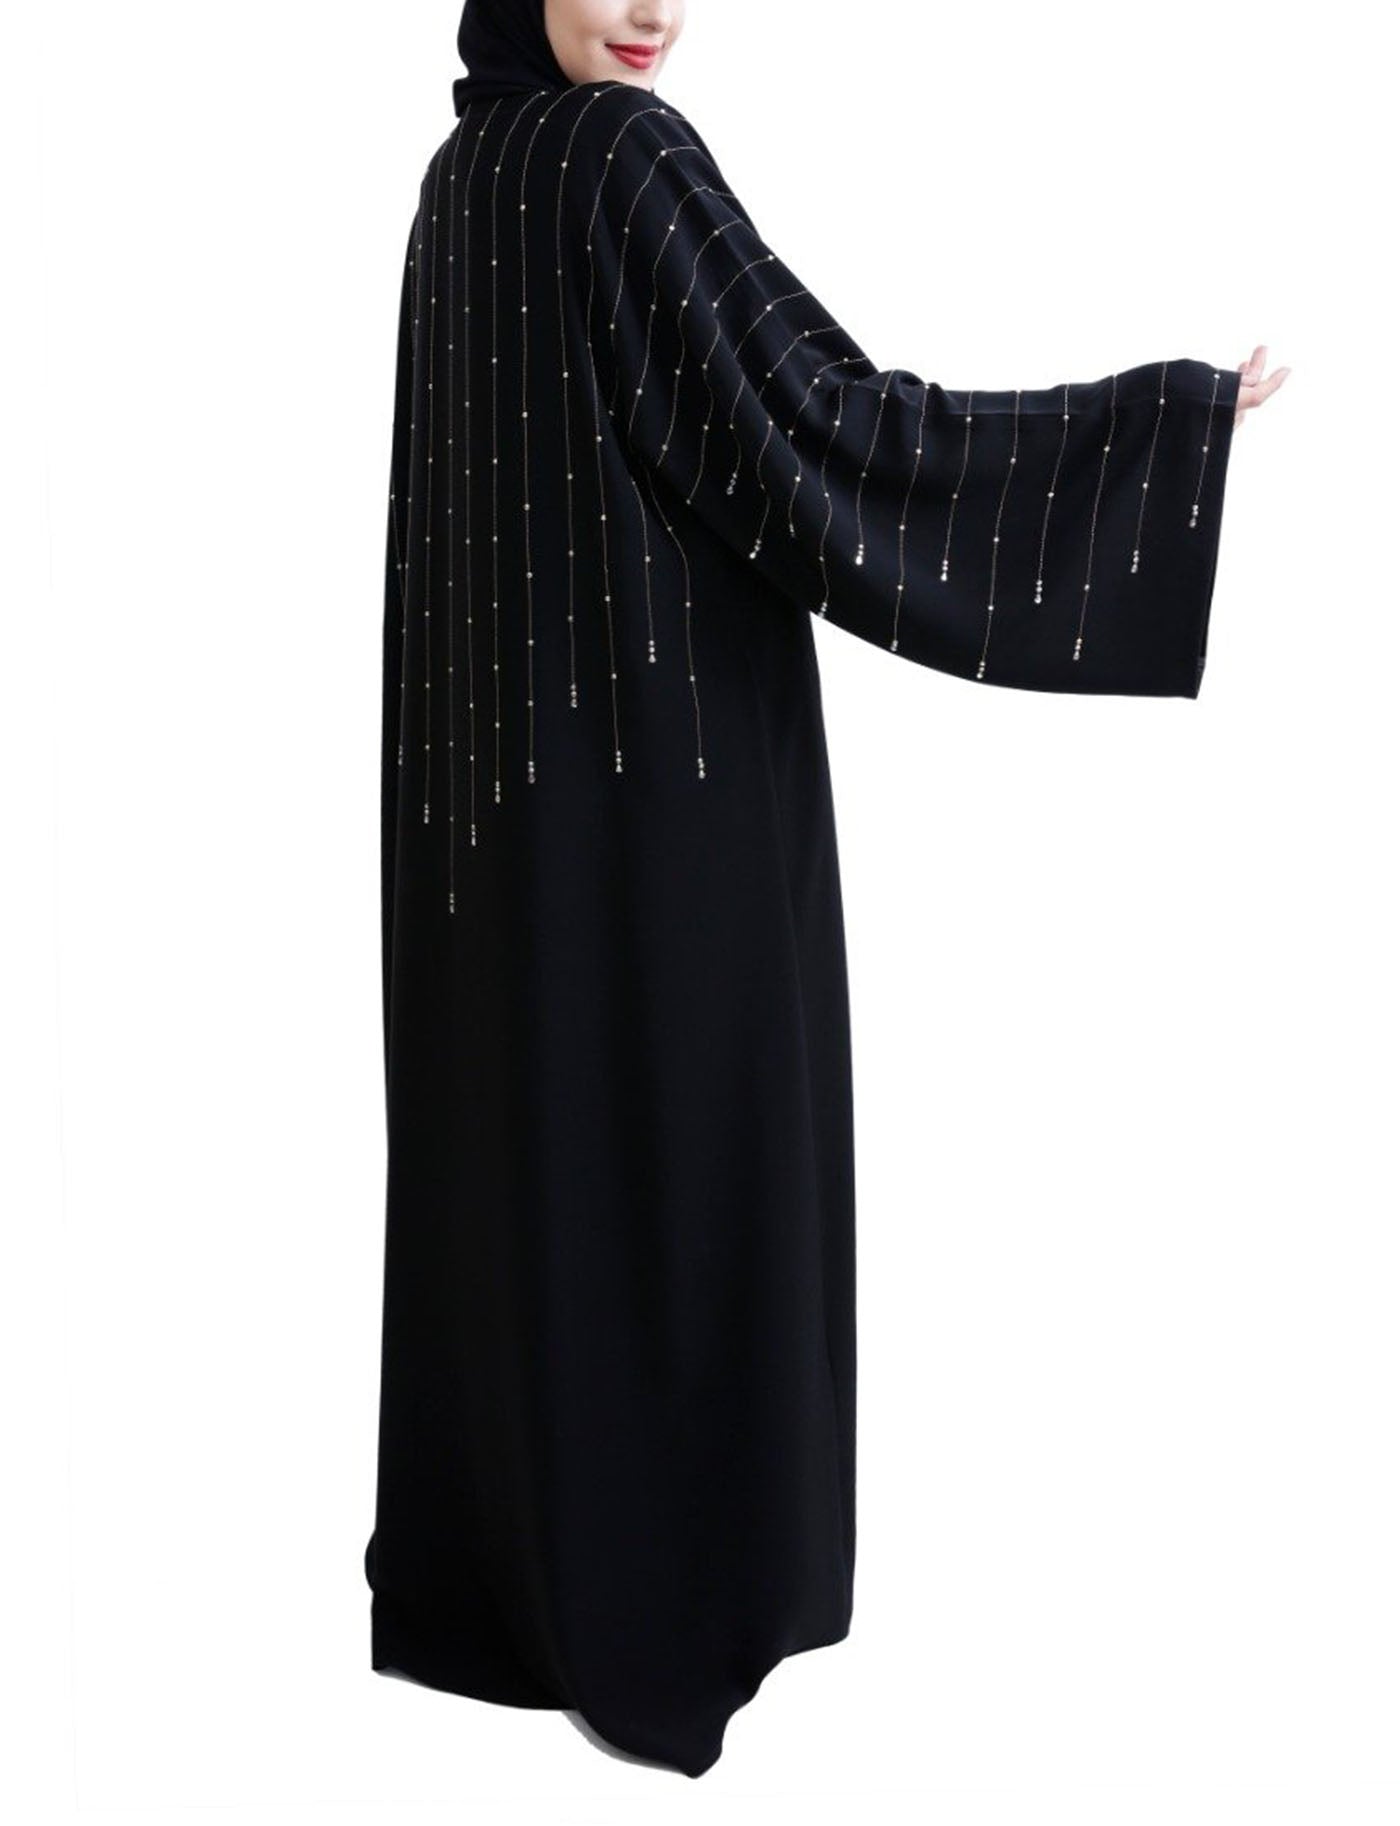 Hanayen Black Abaya With Lines Of Crystals